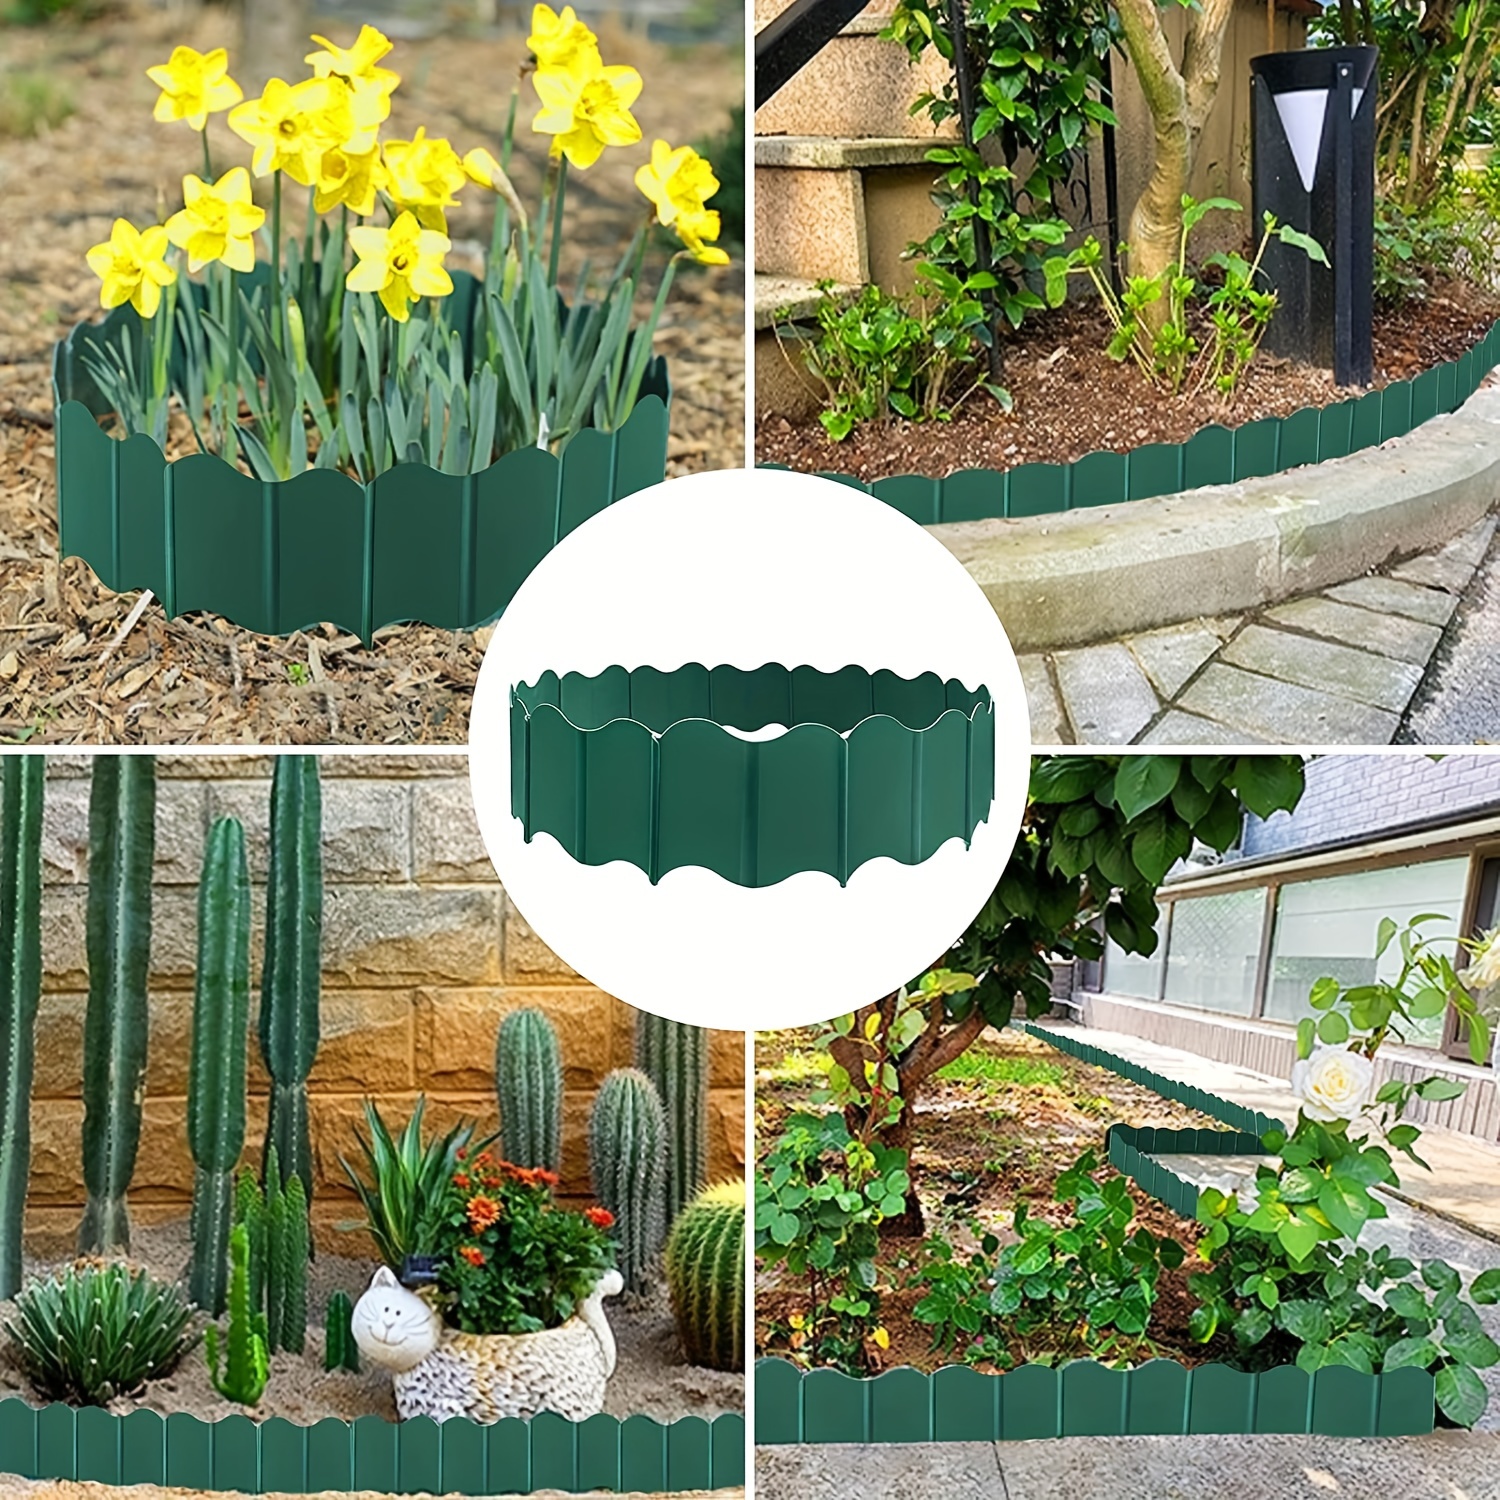 10pcs outdoor garden vegetable fence landscape edging border for lawn partition soil retaining garden decoration